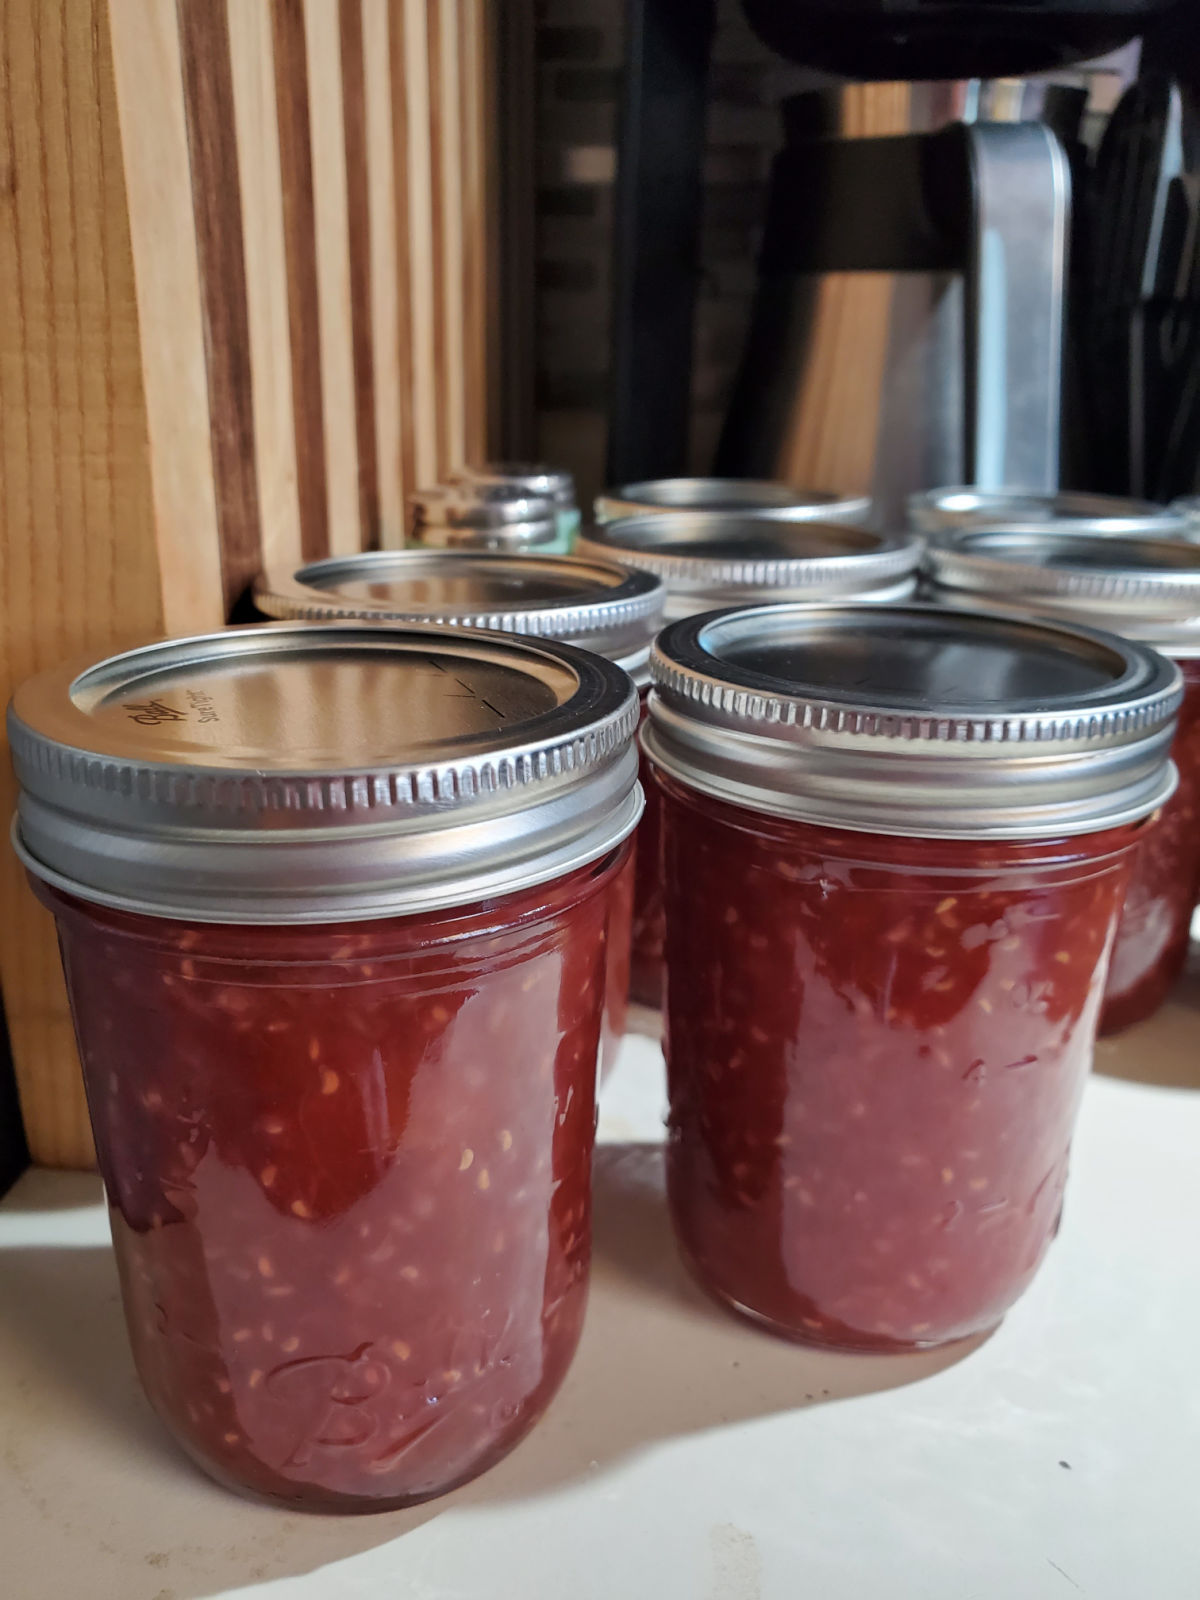 Pint Mason jars of homemade jam on kitchen counter next to stove.